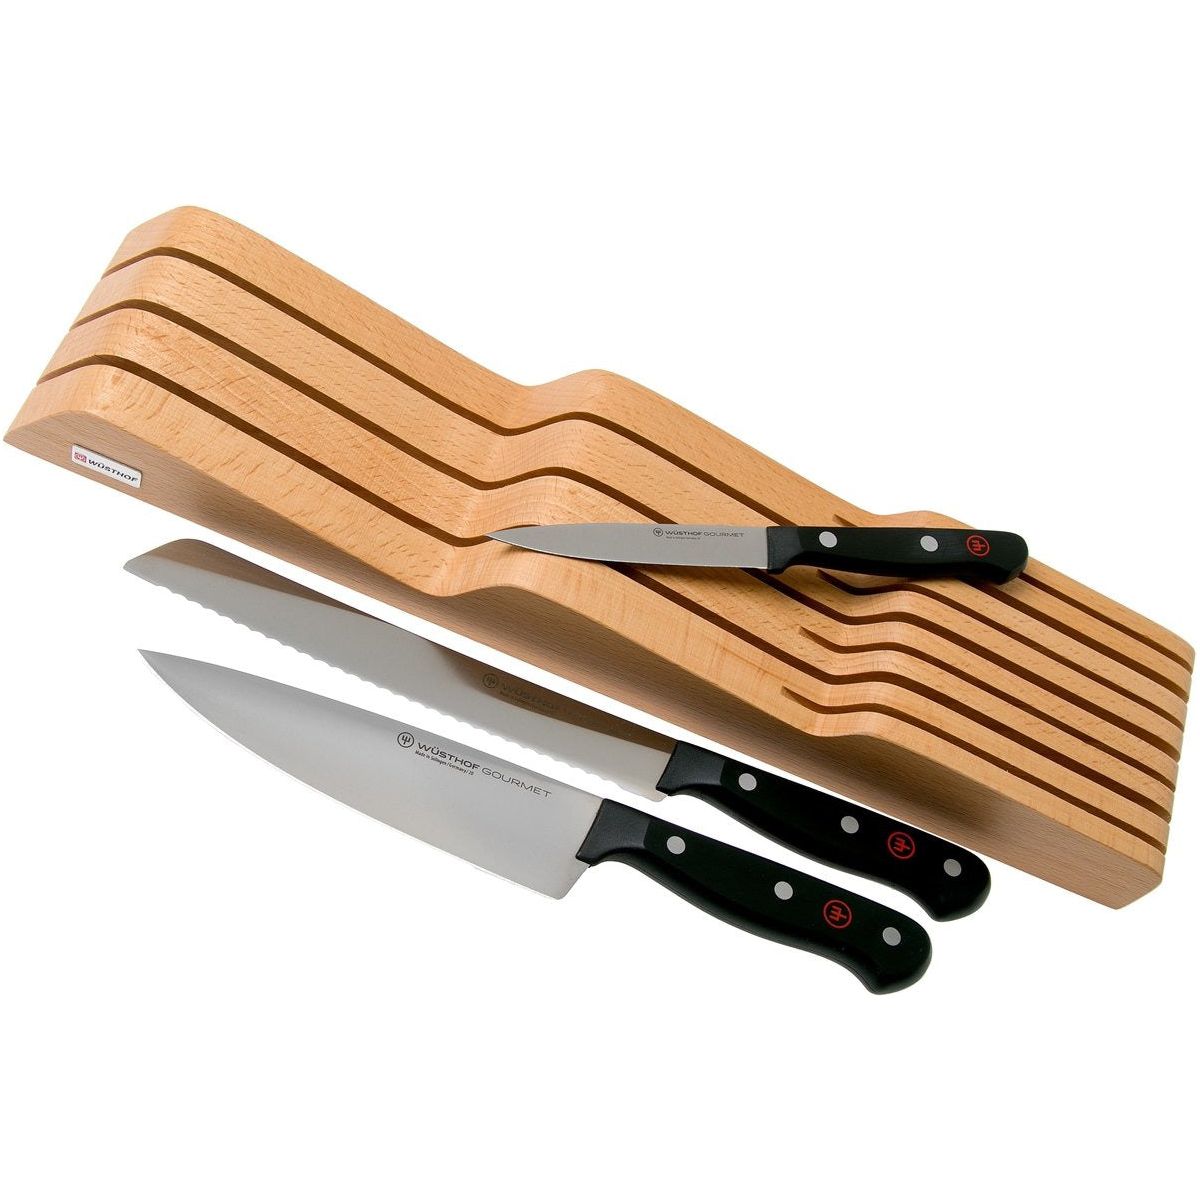 Knife Set 3Pcs /Wood Drawer Organizer طقم سكاكين مع منظم خشبي